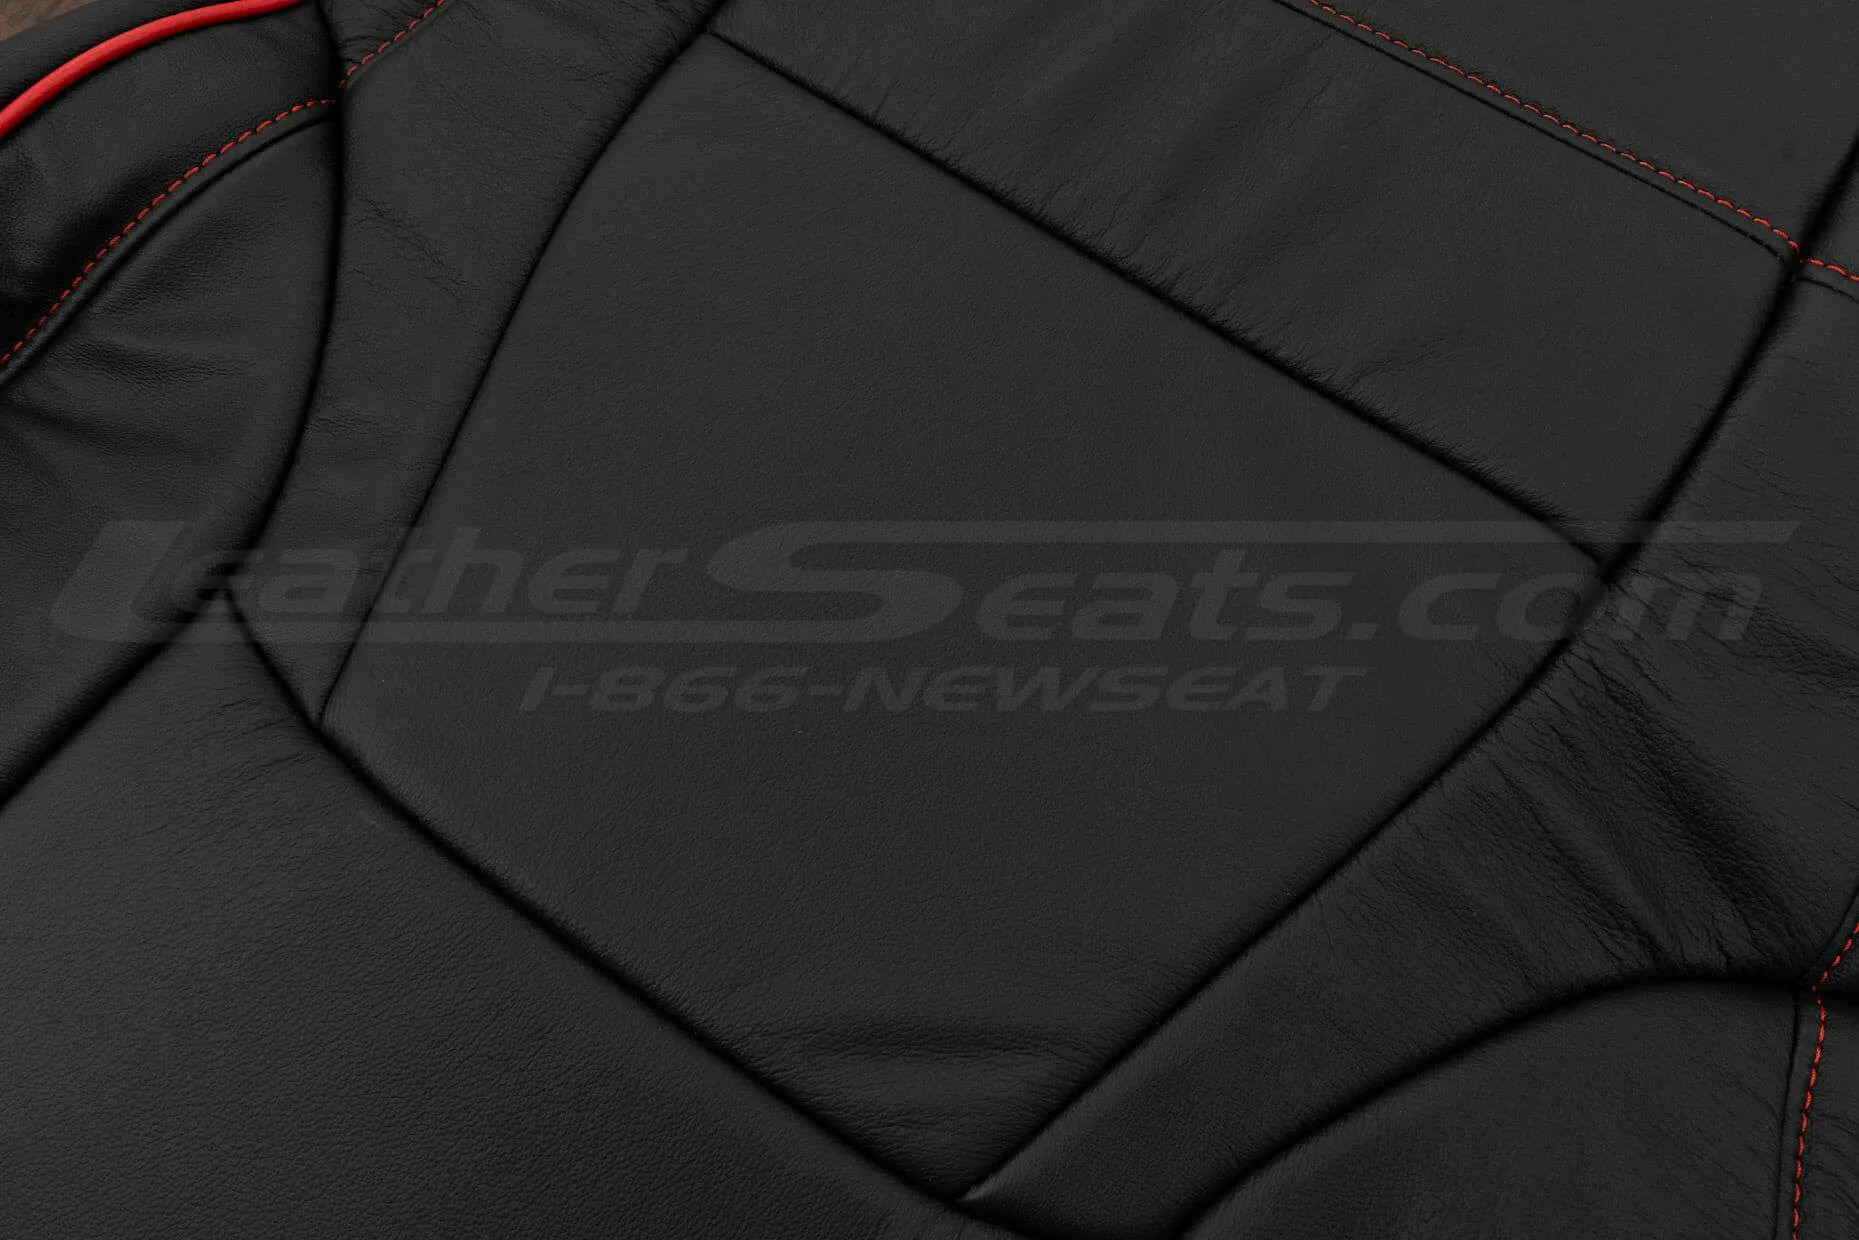 Ecastasy Leather Texture on backrest upholstery